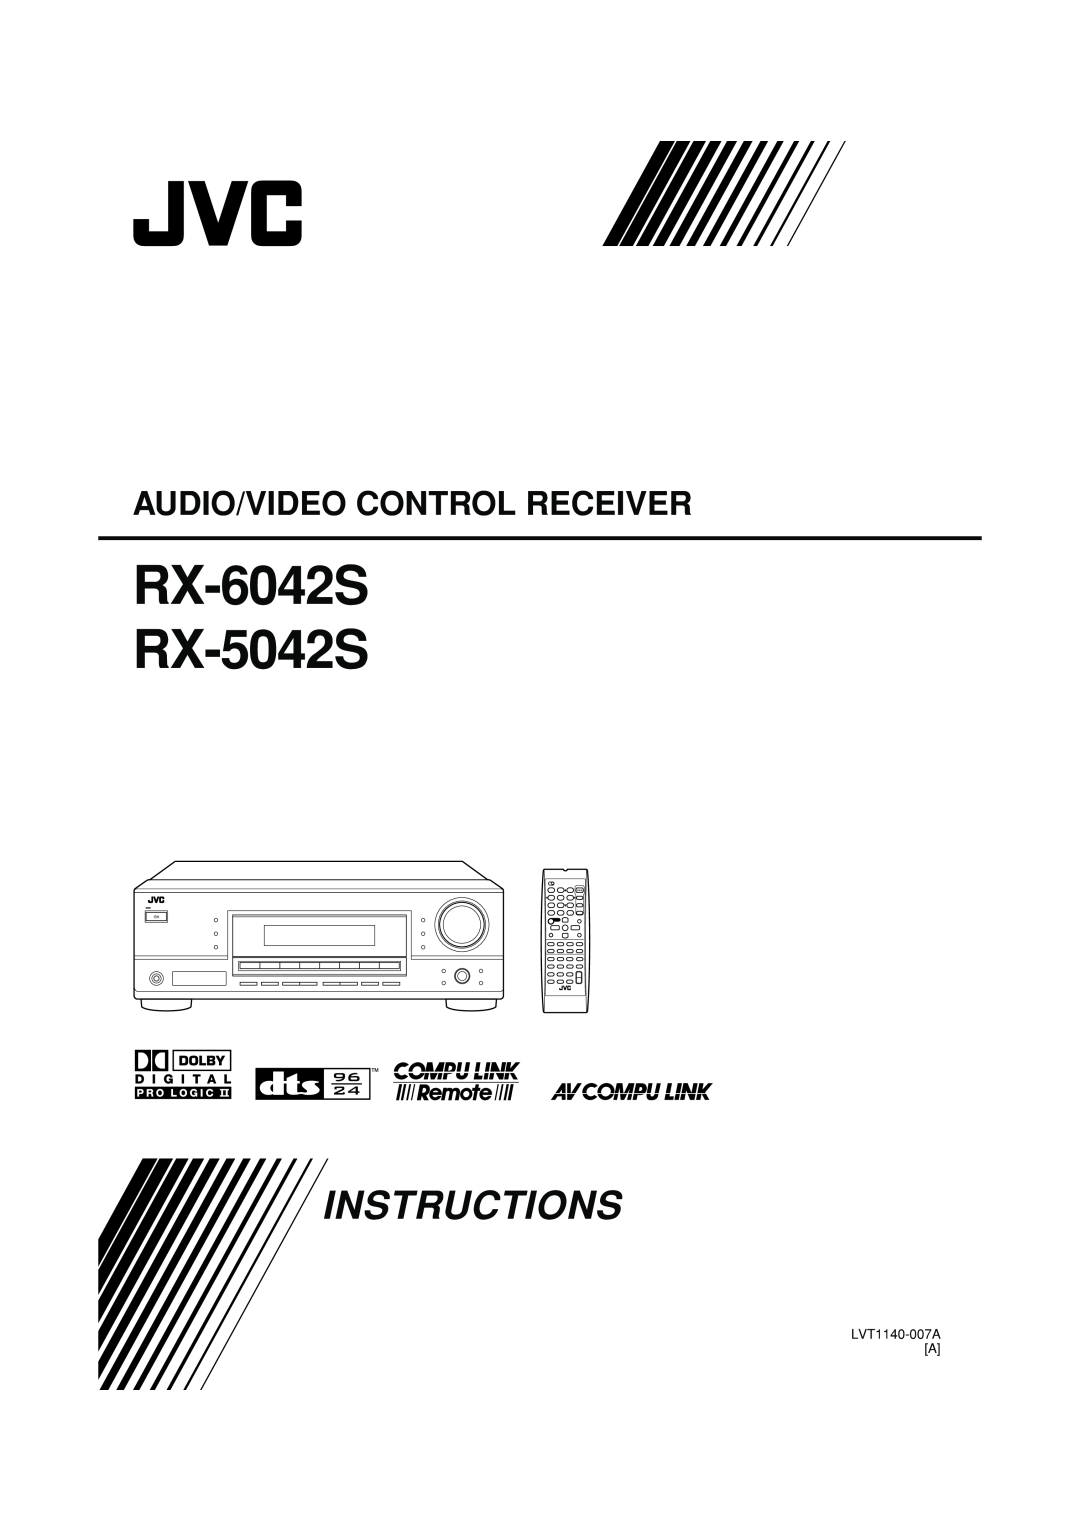 JVC LVT1140-007A manual RX-6042S RX-5042S, Instructions, Audio/Video Control Receiver, Ta/News/Info Display Mode 